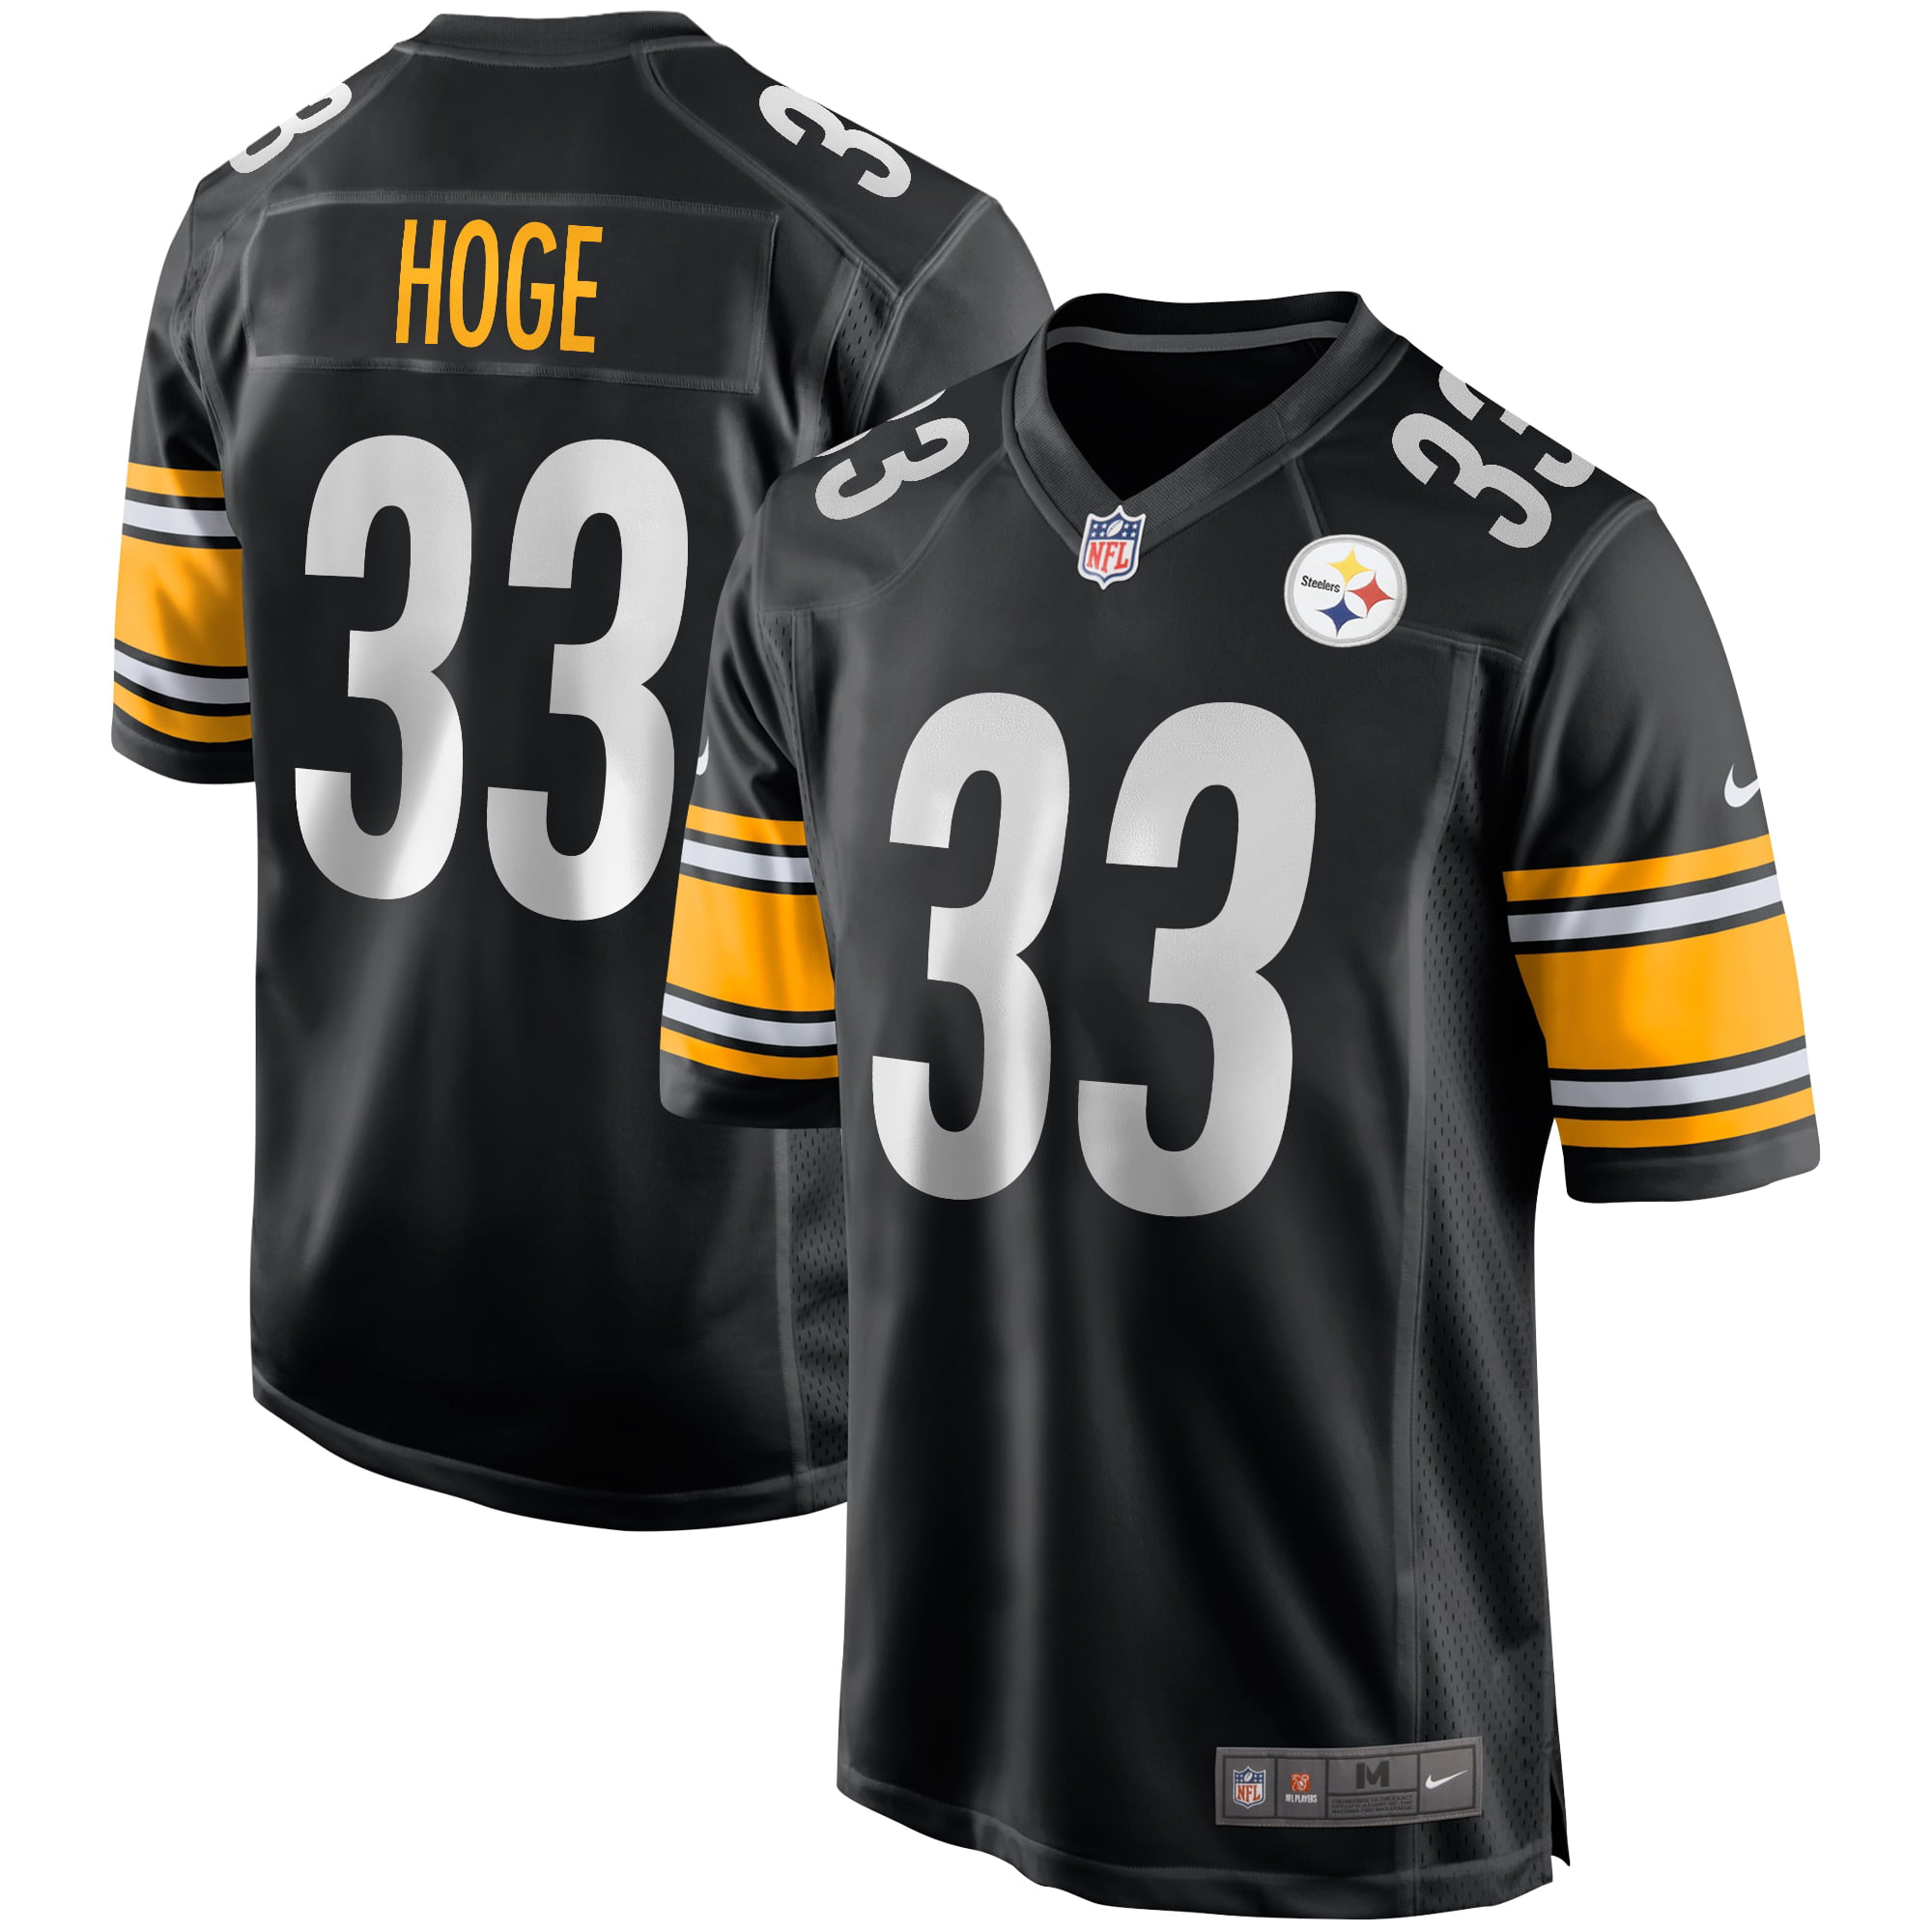 Merril Hoge Pittsburgh Steelers Nike Game Retired Player Jersey - Black - Walmart.com